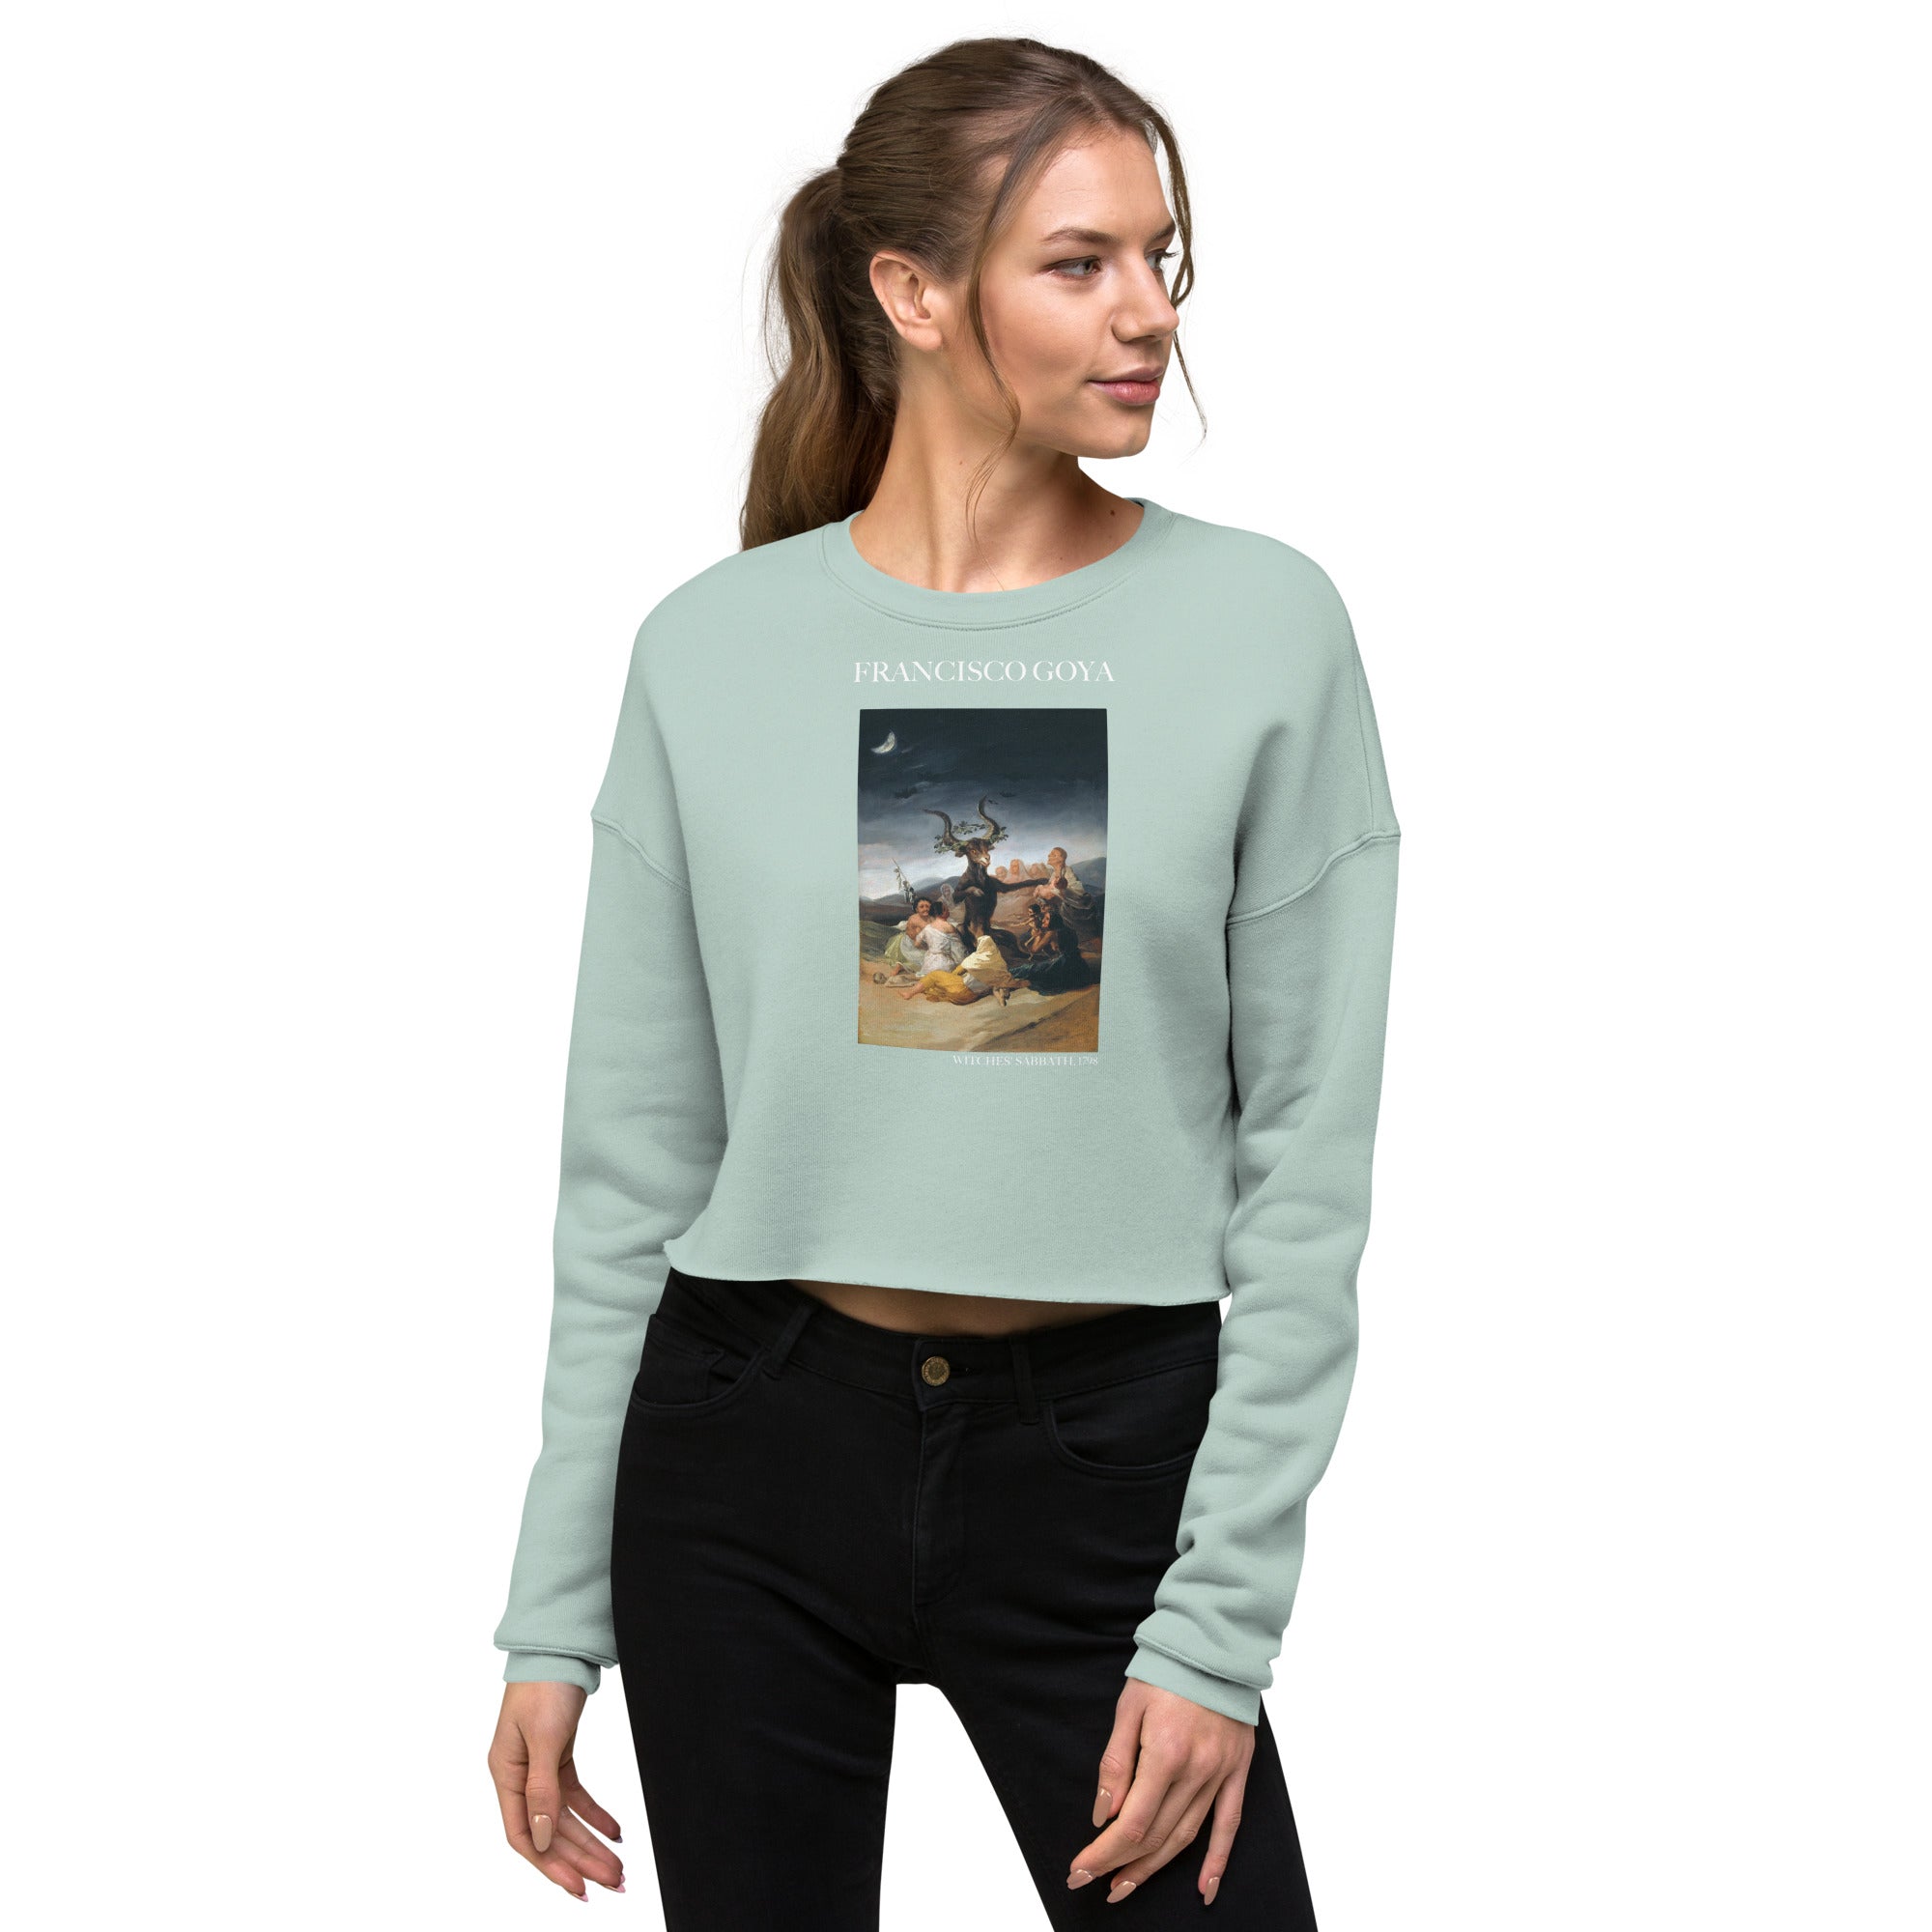 Francisco Goya 'Witches' Sabbath' Famous Painting Cropped Sweatshirt | Premium Art Cropped Sweatshirt